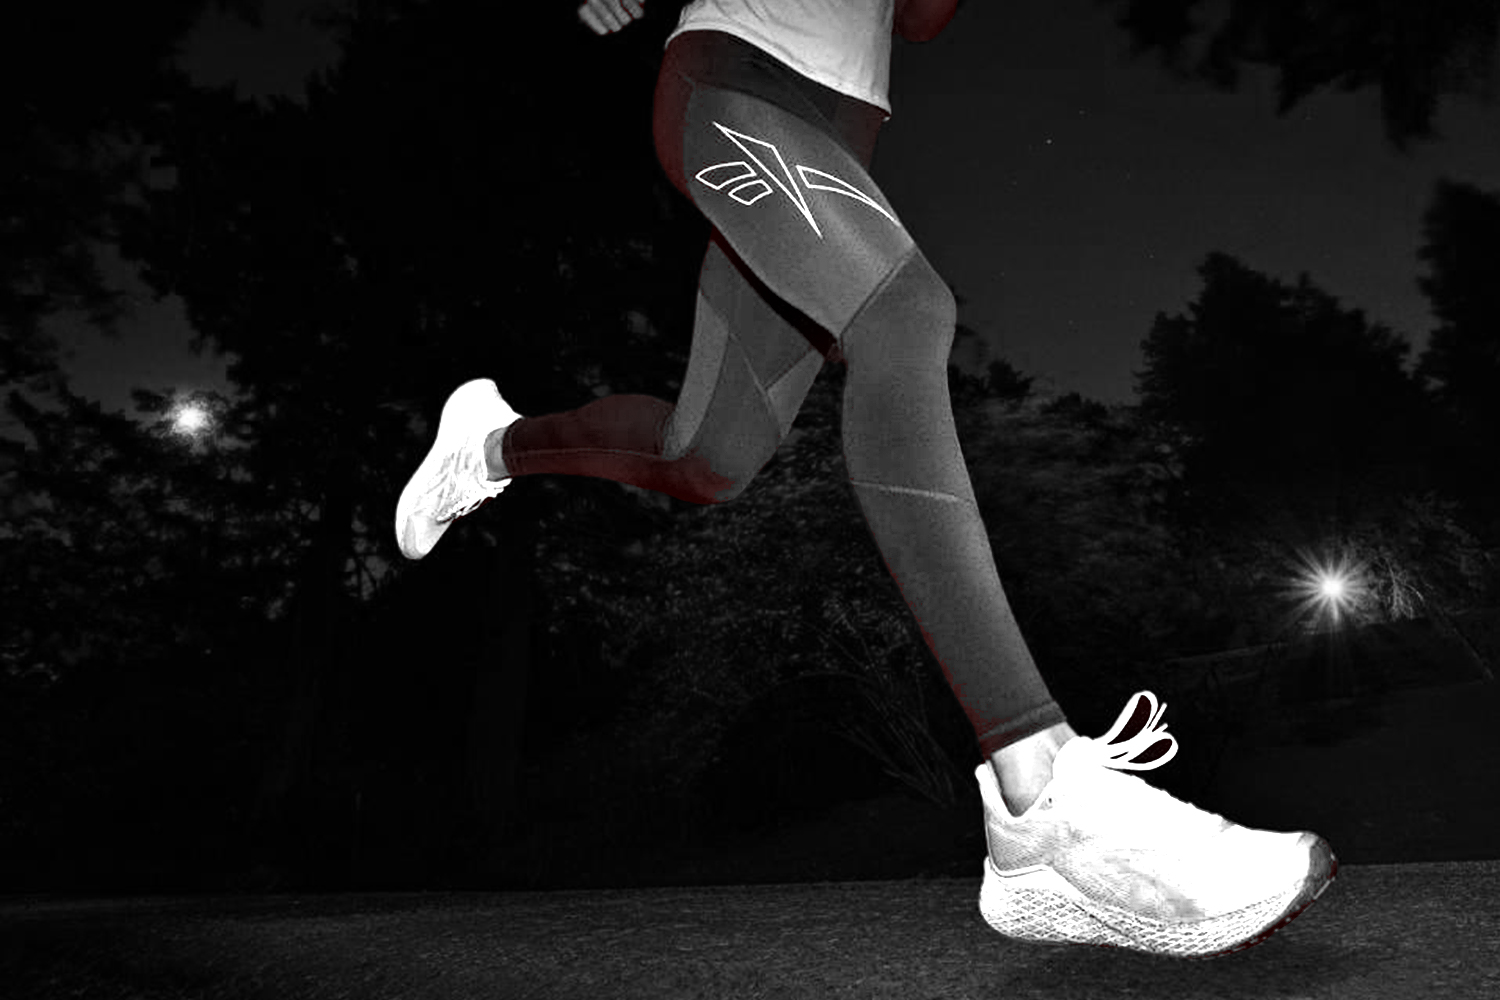 2XU Core Compression leggings for women - Soccer Sport Fitness